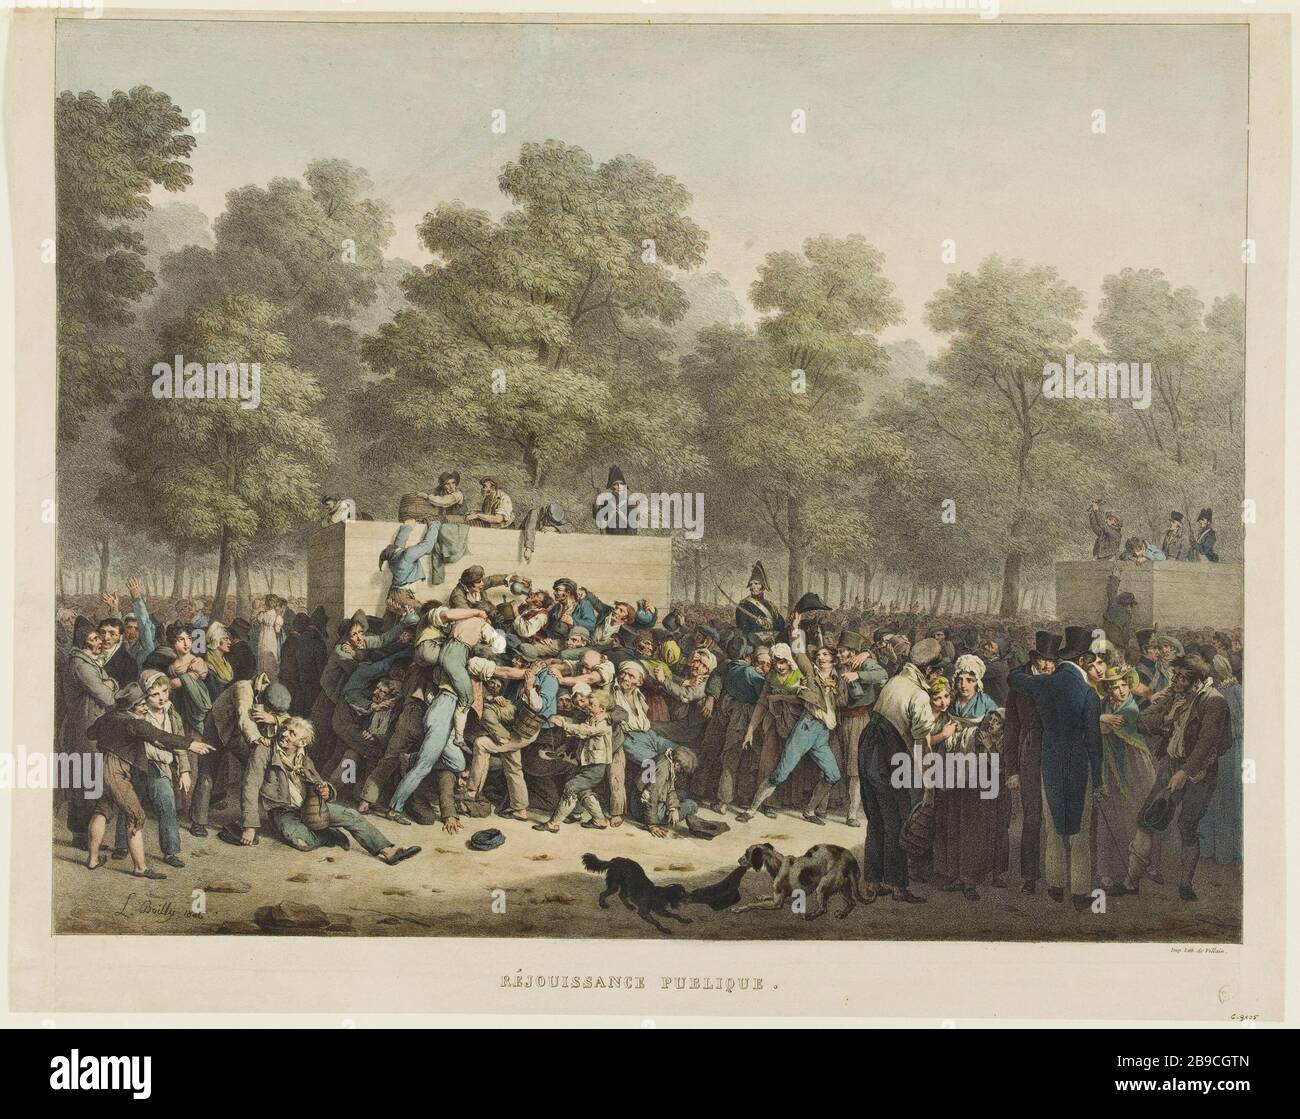 Die Öffentlichkeit freute sich über Louis Boilly (1761-1845) und den Bösewicht. "Réjouissance publique". Lithographie colorée. 1826. Paris, musée Carnavalet. Stockfoto